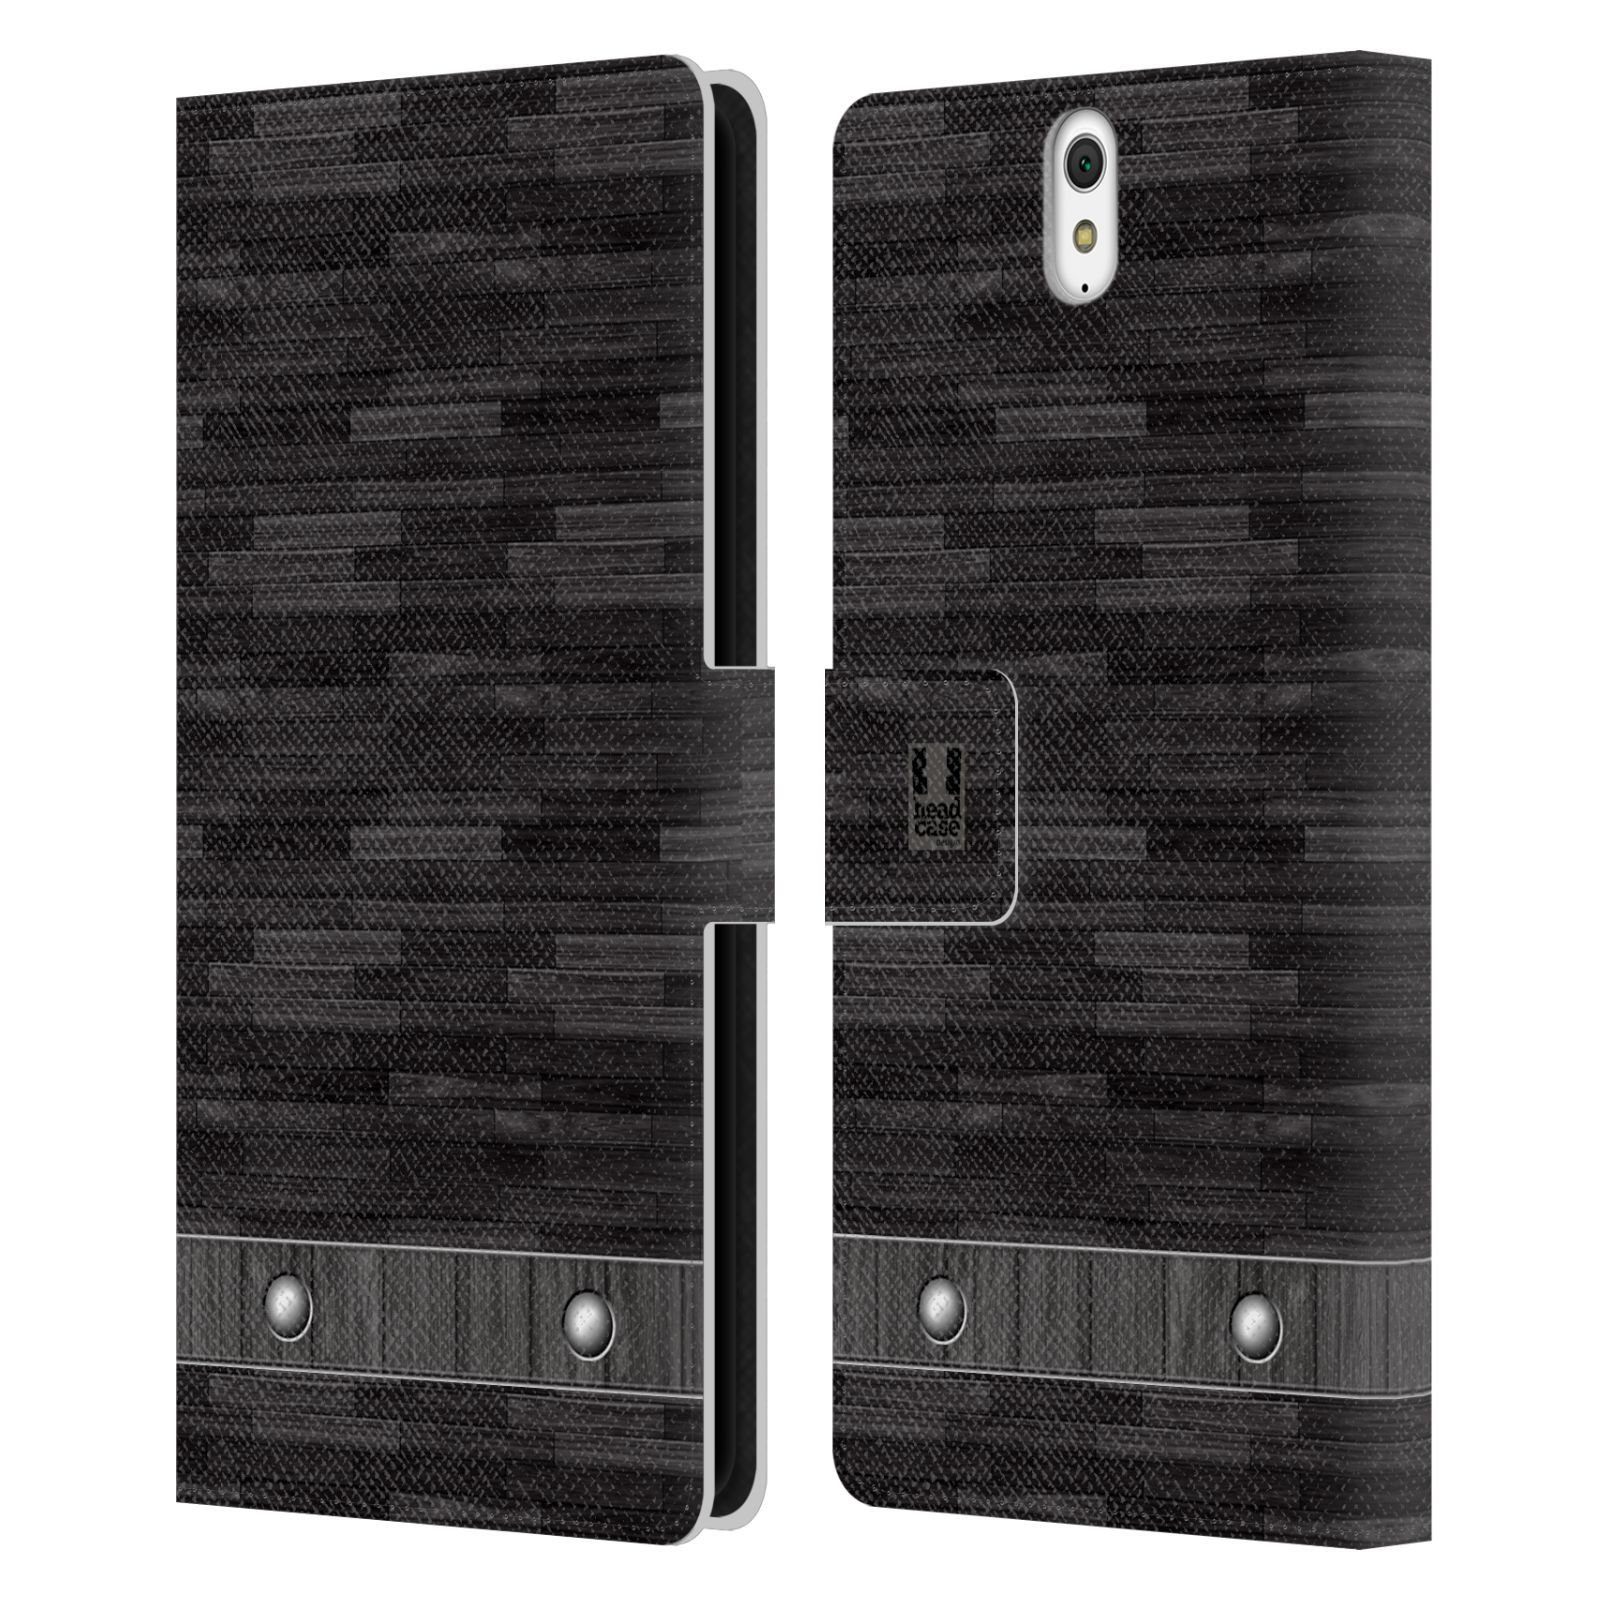 HEAD CASE Flipové pouzdro pro mobil SONY XPERIA C5 Ultra stavební textury dřevo černá barva